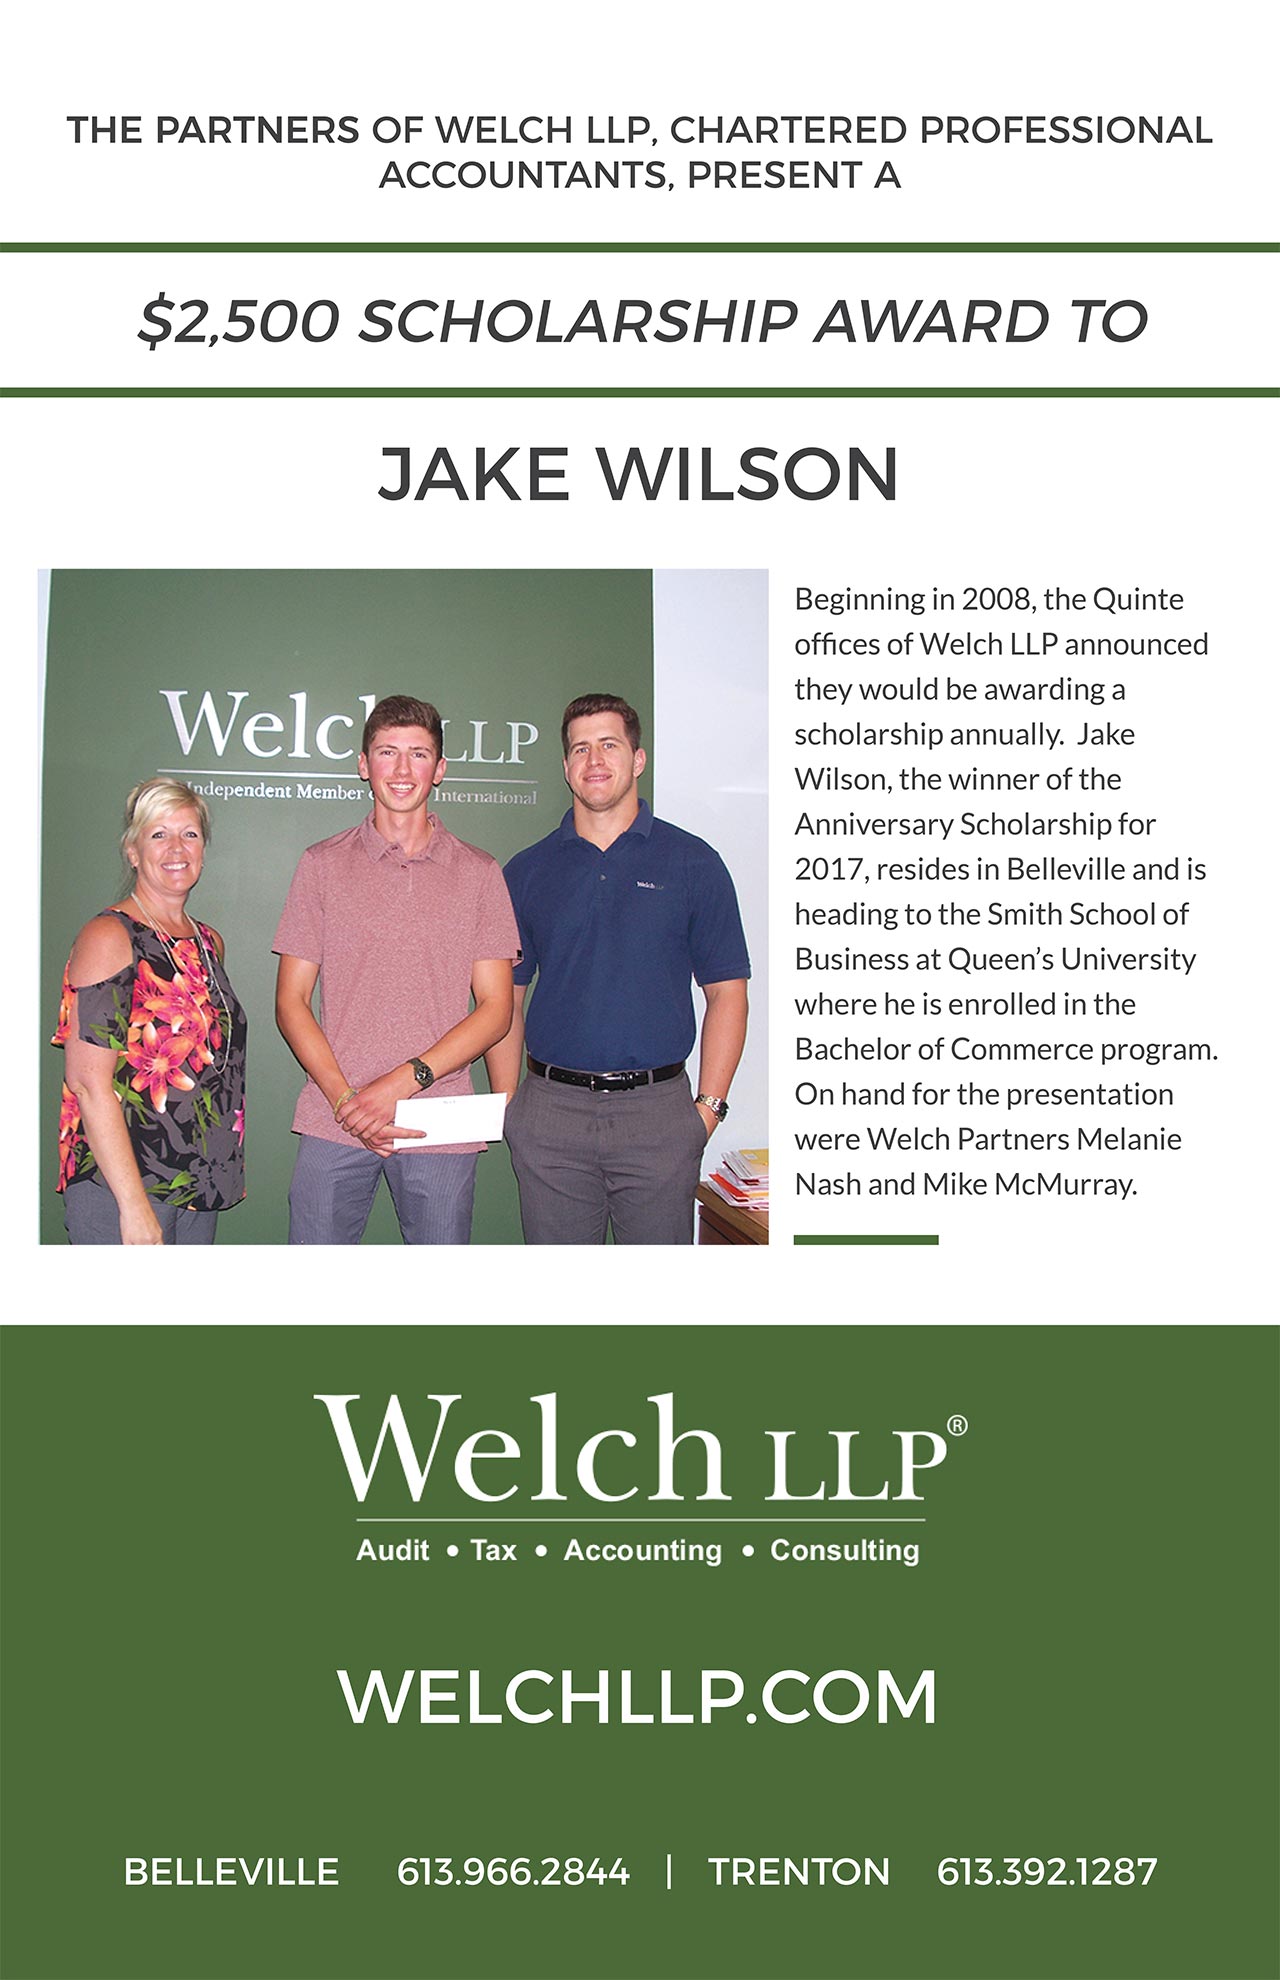 Welch LLP Partners present Jake Wilson a $2,500 scholarship